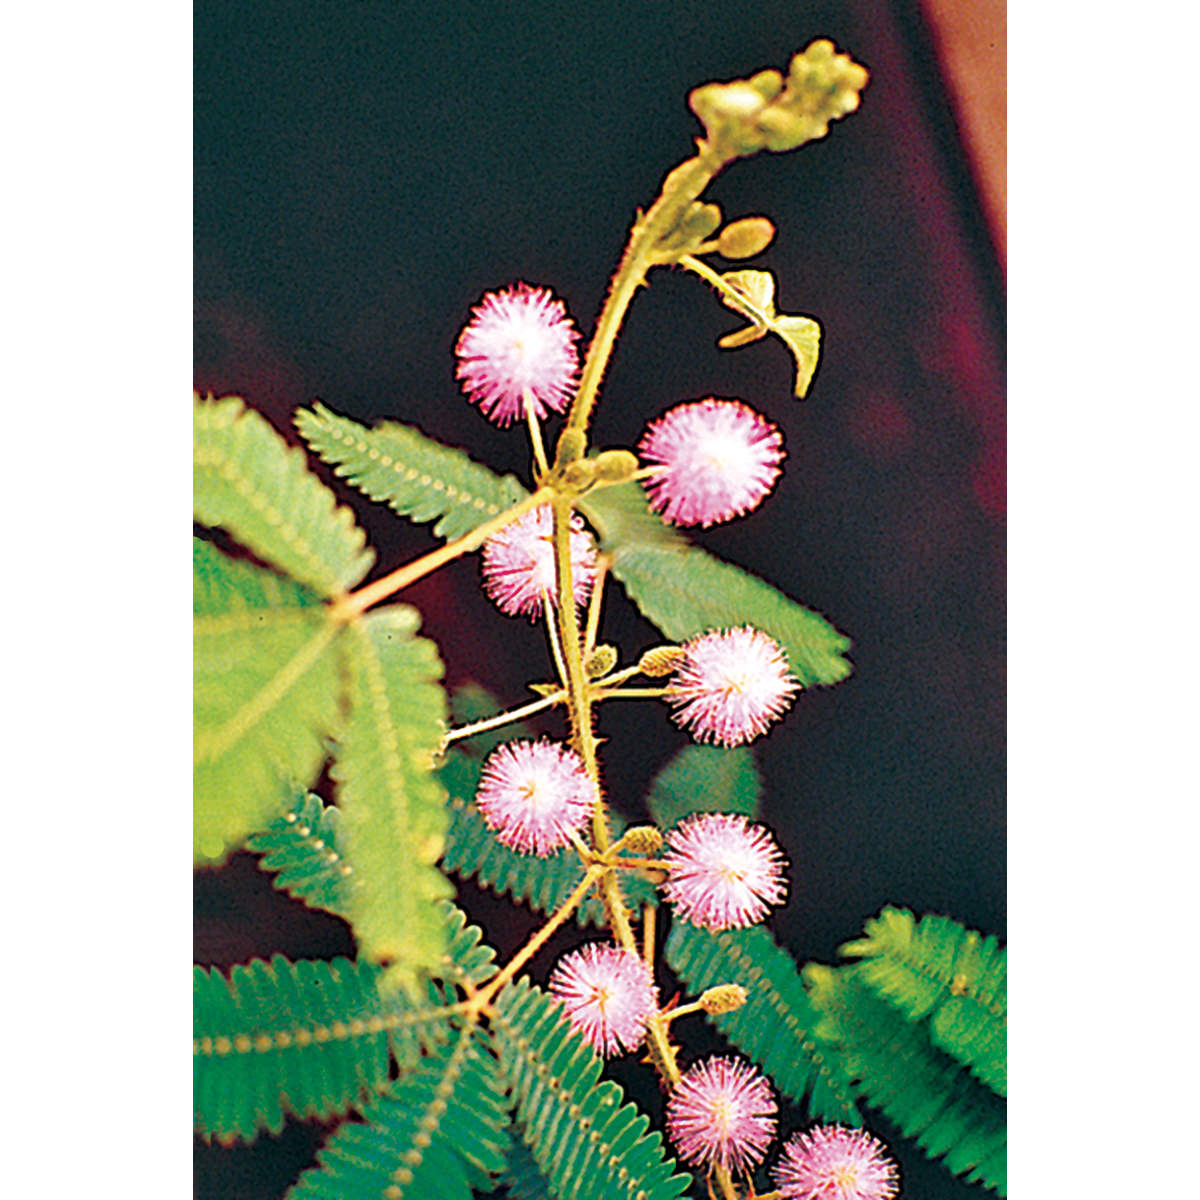 Pudica Mimosa Seeds